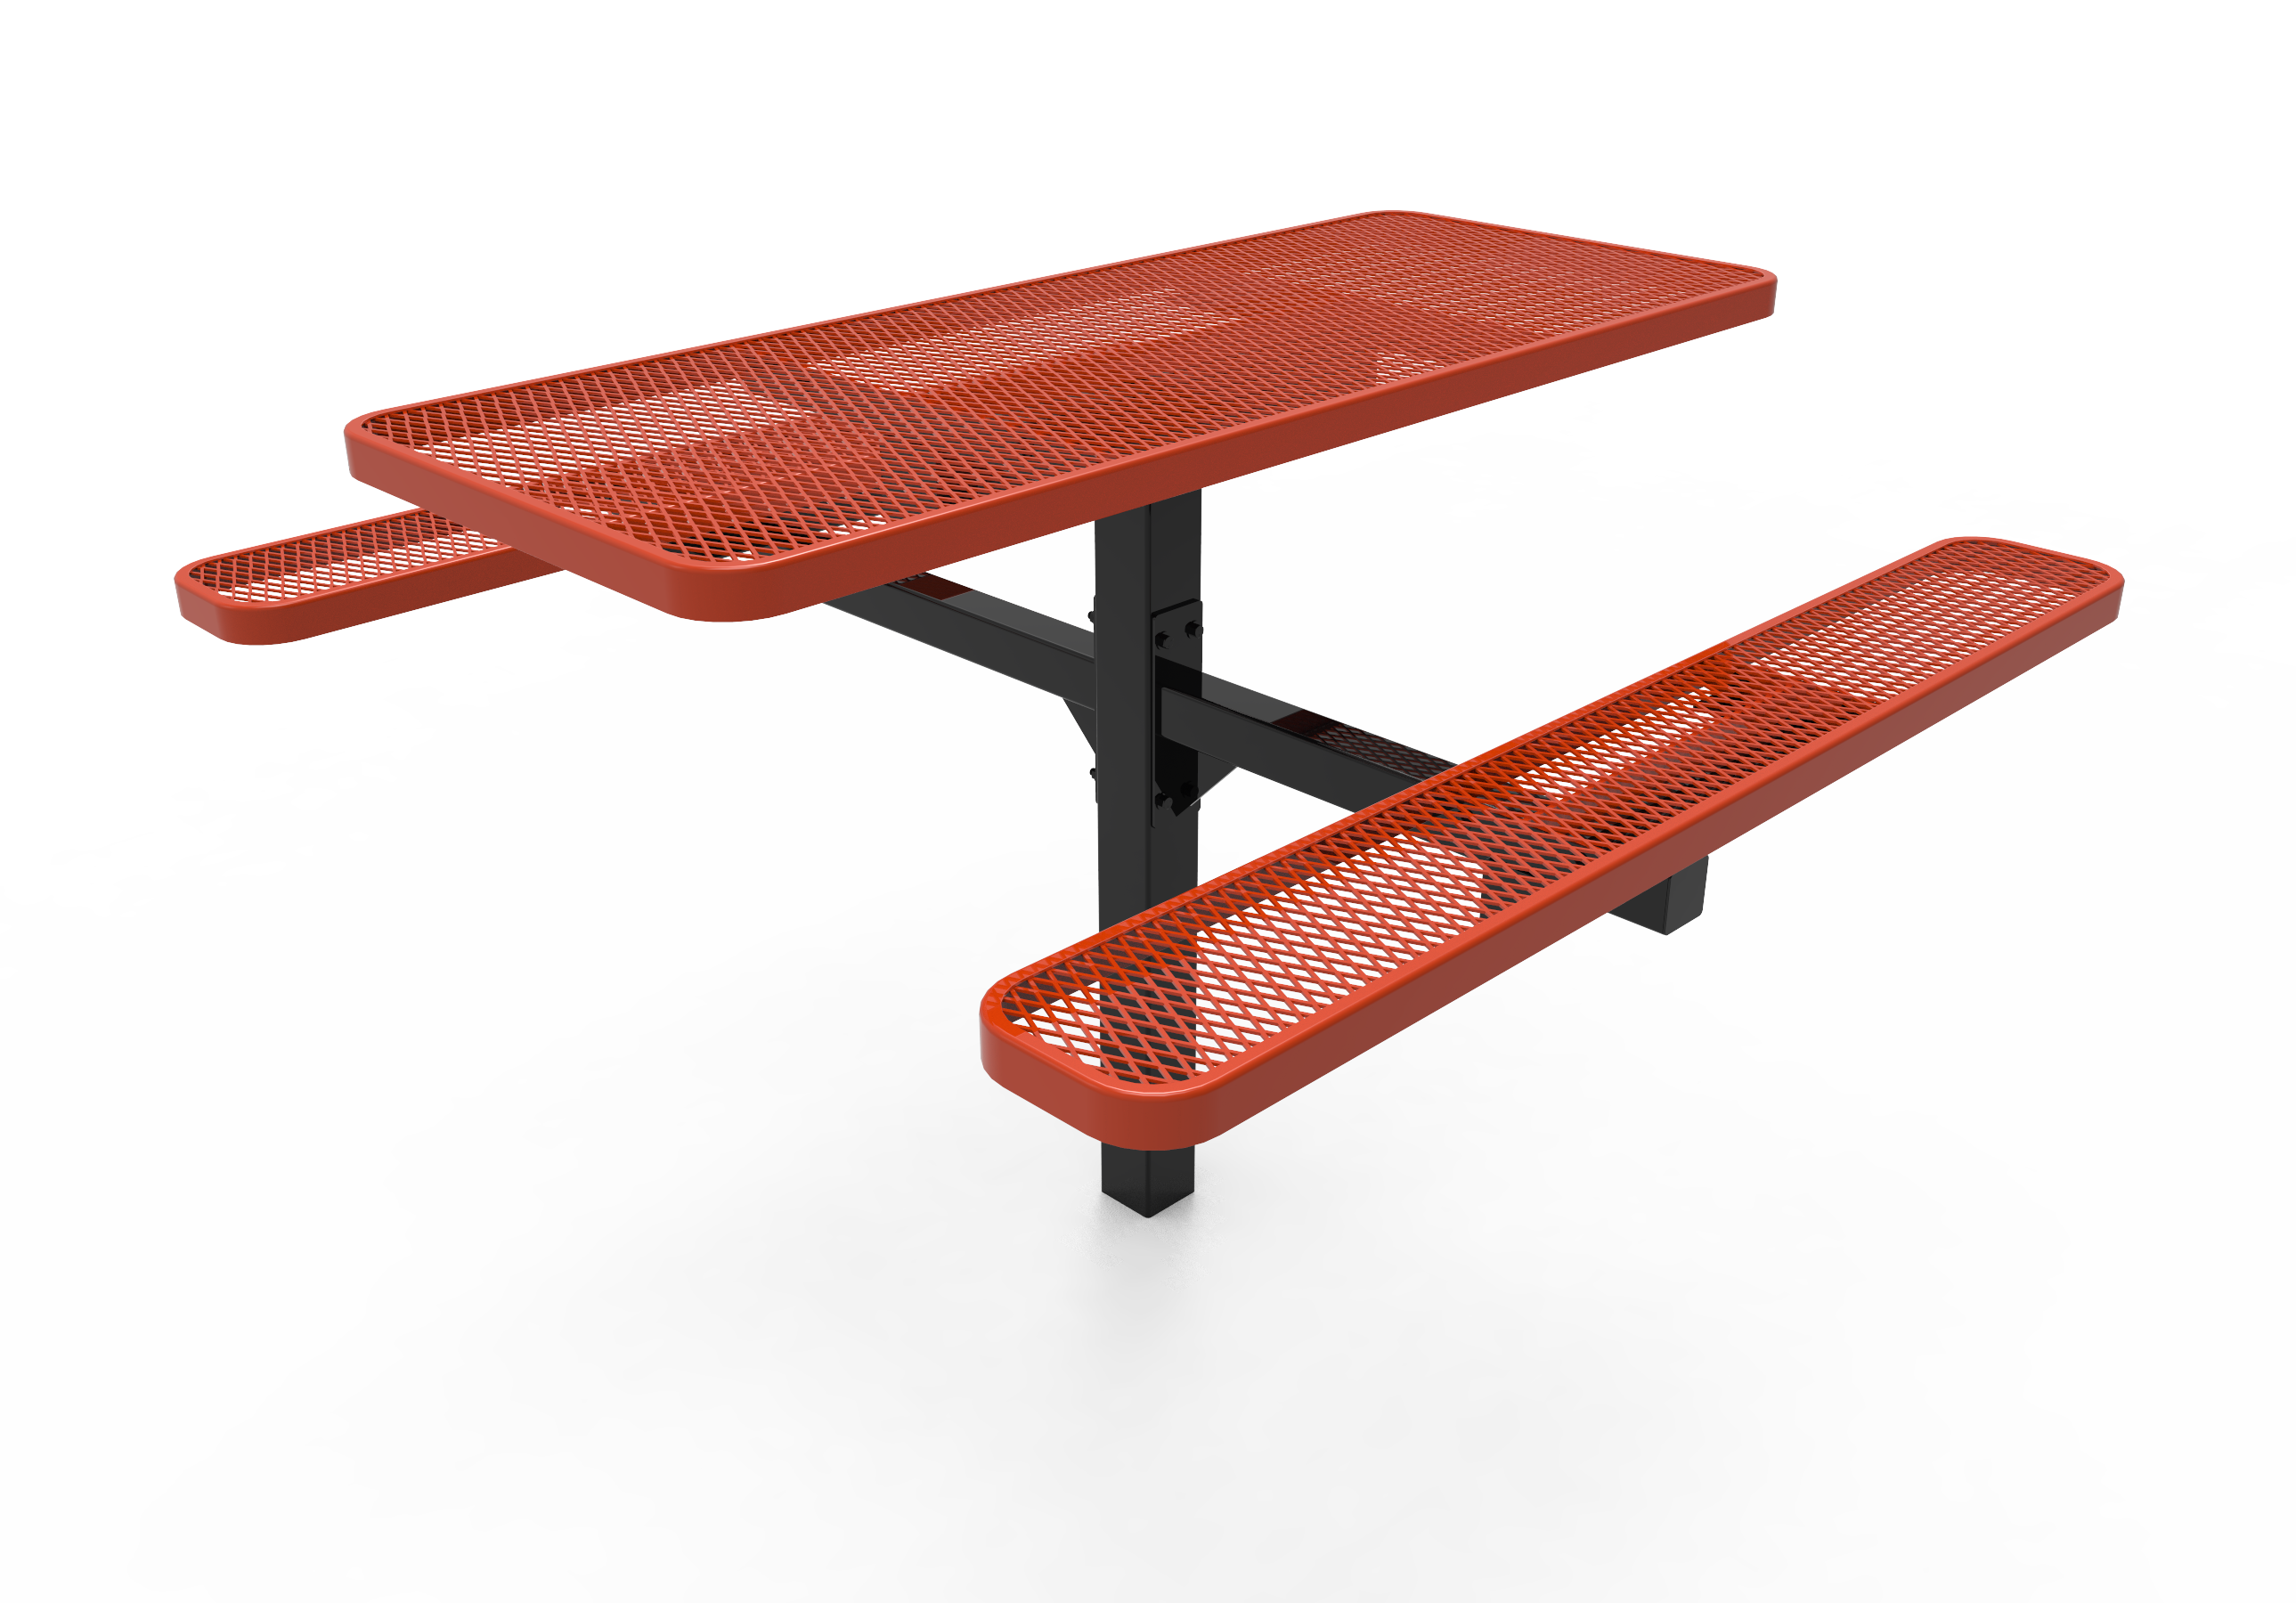 6′ Single Pedestal Picnic Table In Ground-Mesh
TRT06-C-06-000
Industry Standard Finish
$1175.00
TRT06-A-06-000
Advantage Premium Finish
$1469.00
